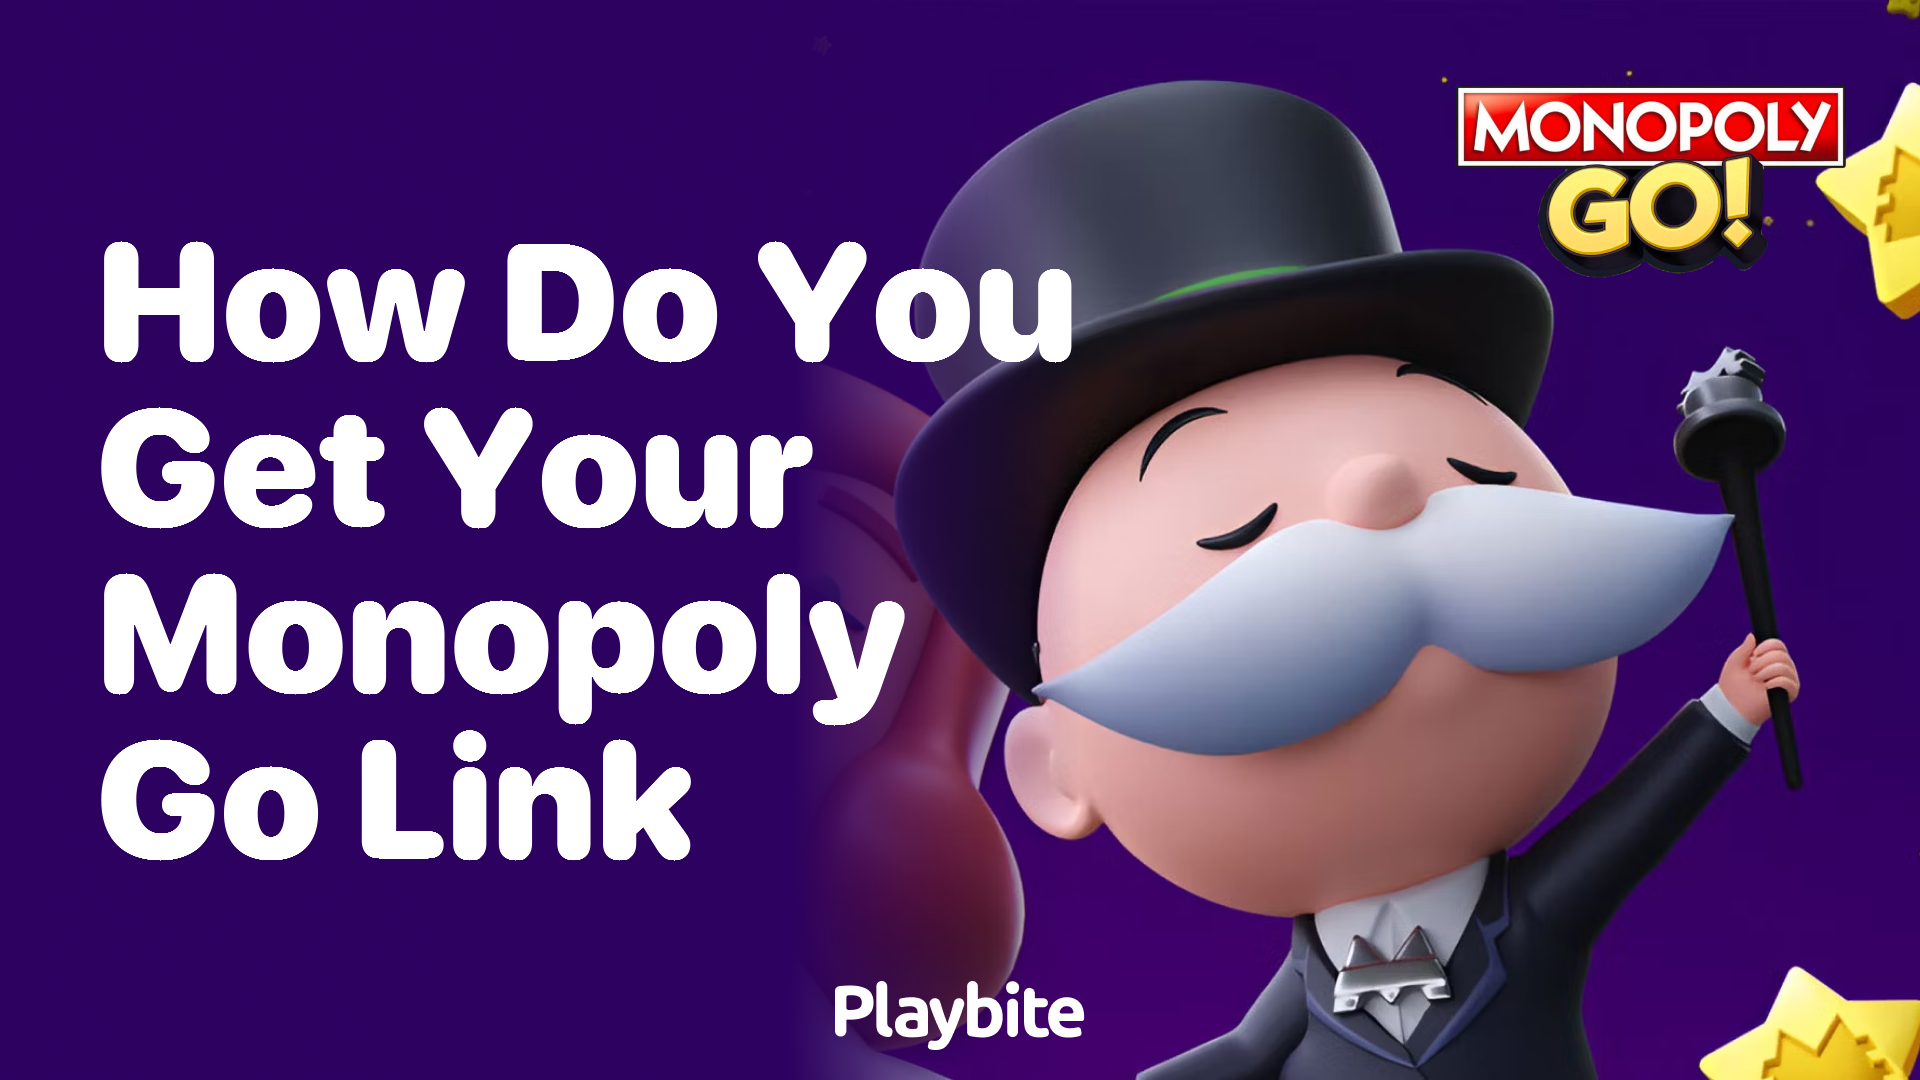 How Do You Get Your Monopoly Go Link?